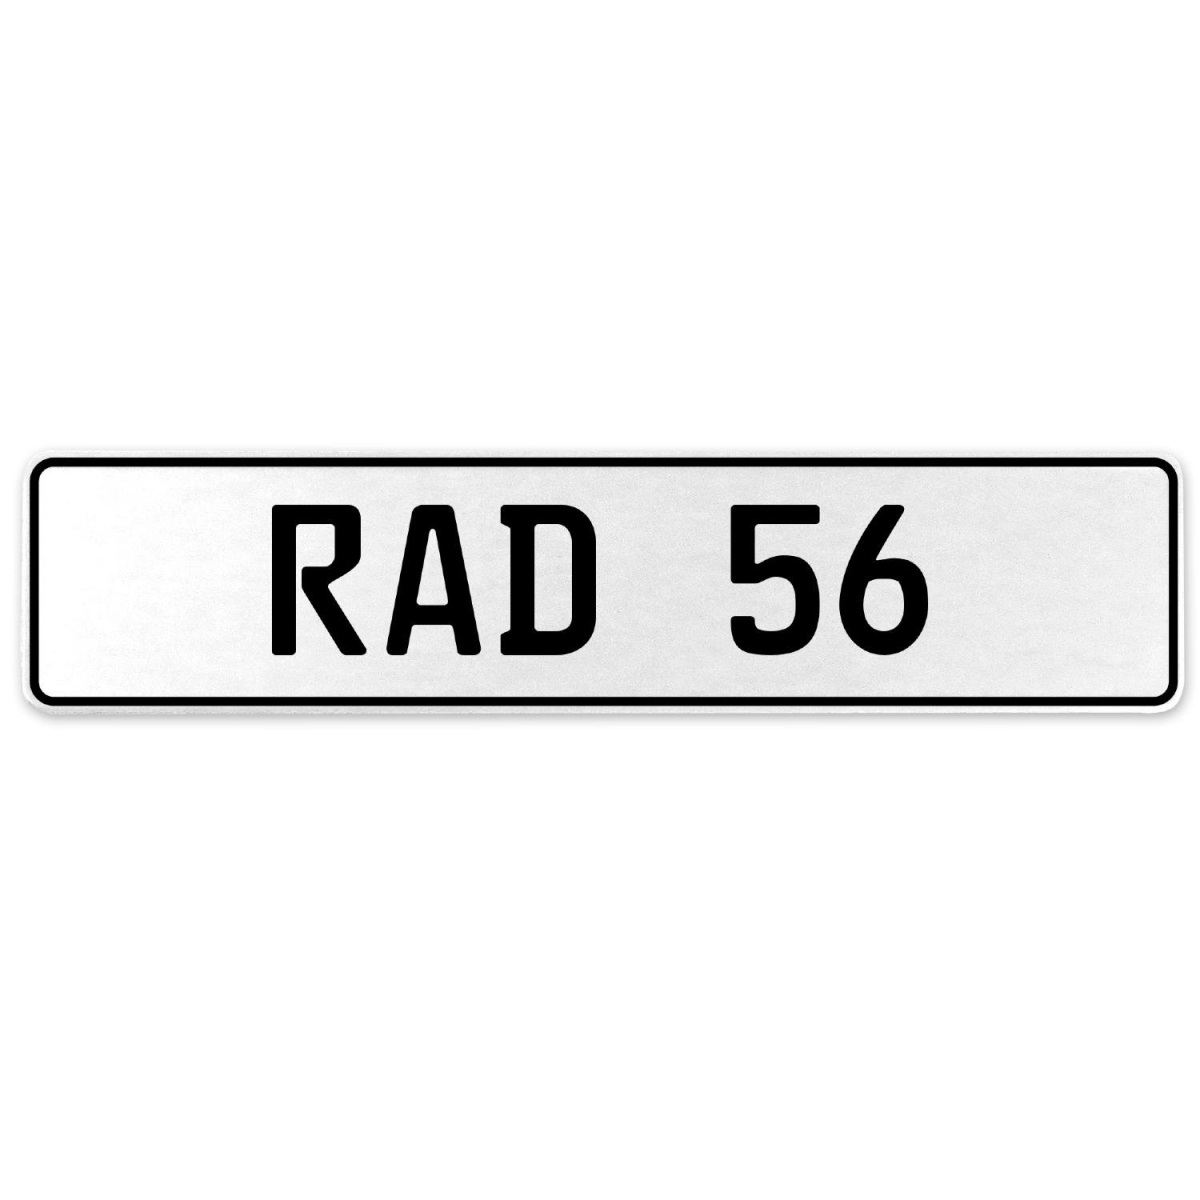 553960 Rad 56 - White Aluminum Street Sign Mancave Euro Plate Name Door Sign Wall Art